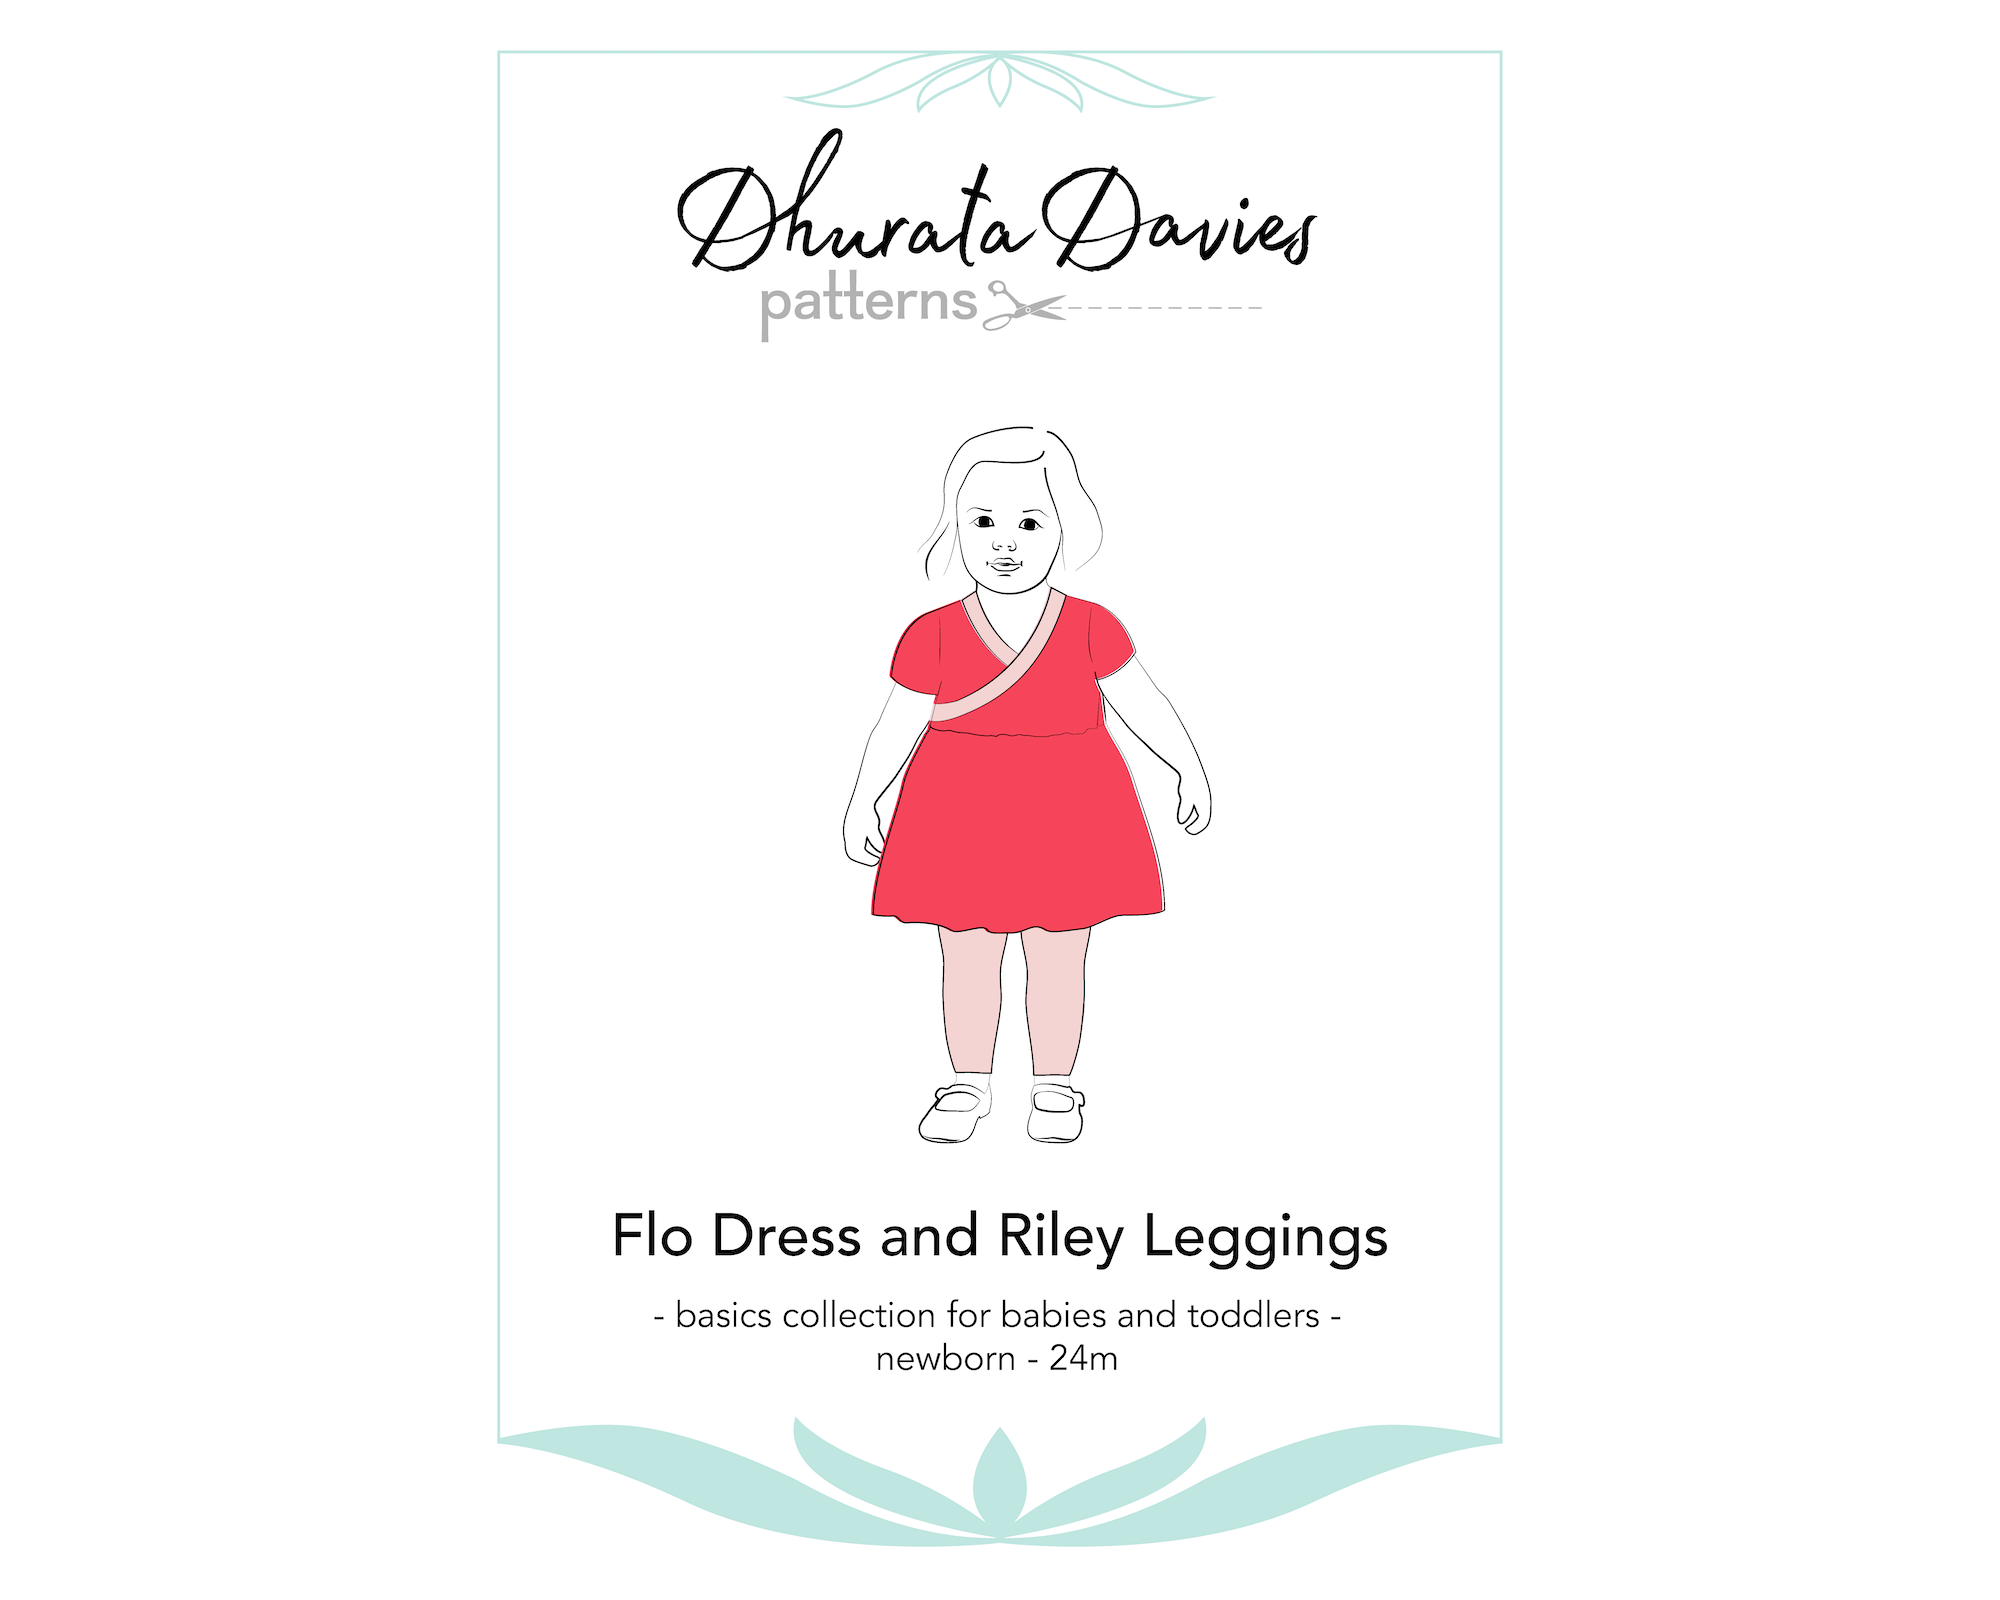 Dhurata Davies Patterns Flo Dress & Riley Leggings